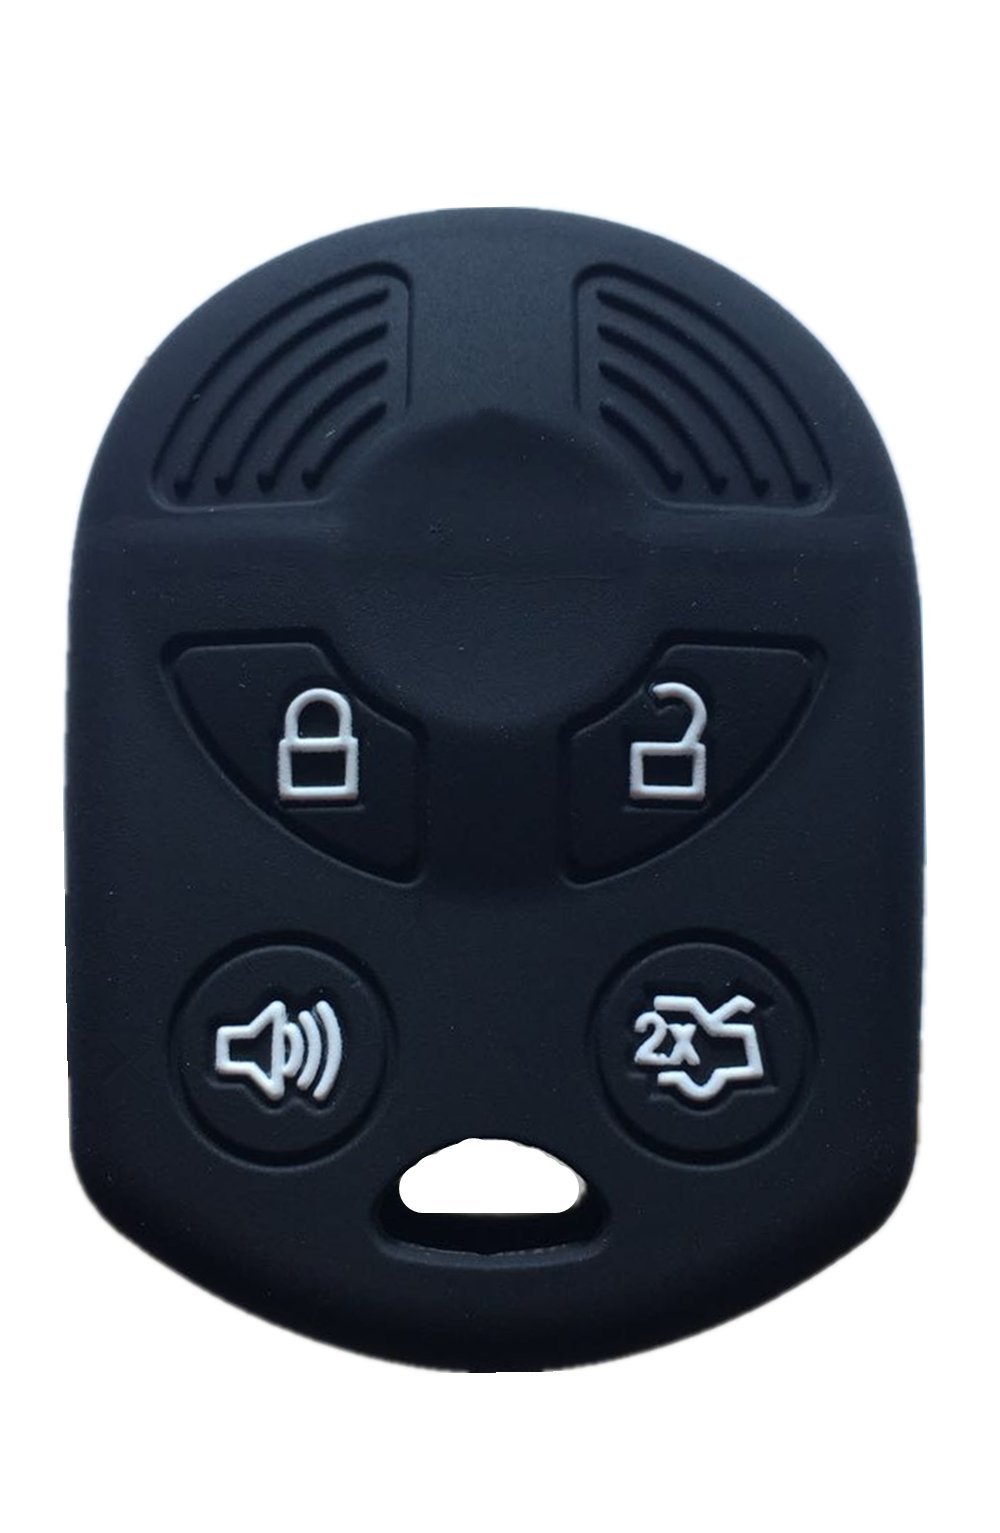  [AUSTRALIA] - Rpkey Silicone Keyless Entry Remote Control Key Fob Cover Case protector For Ford Lincoln Mercury OUCD6000022 164-R8046 164-R7040 CWTWB1U722